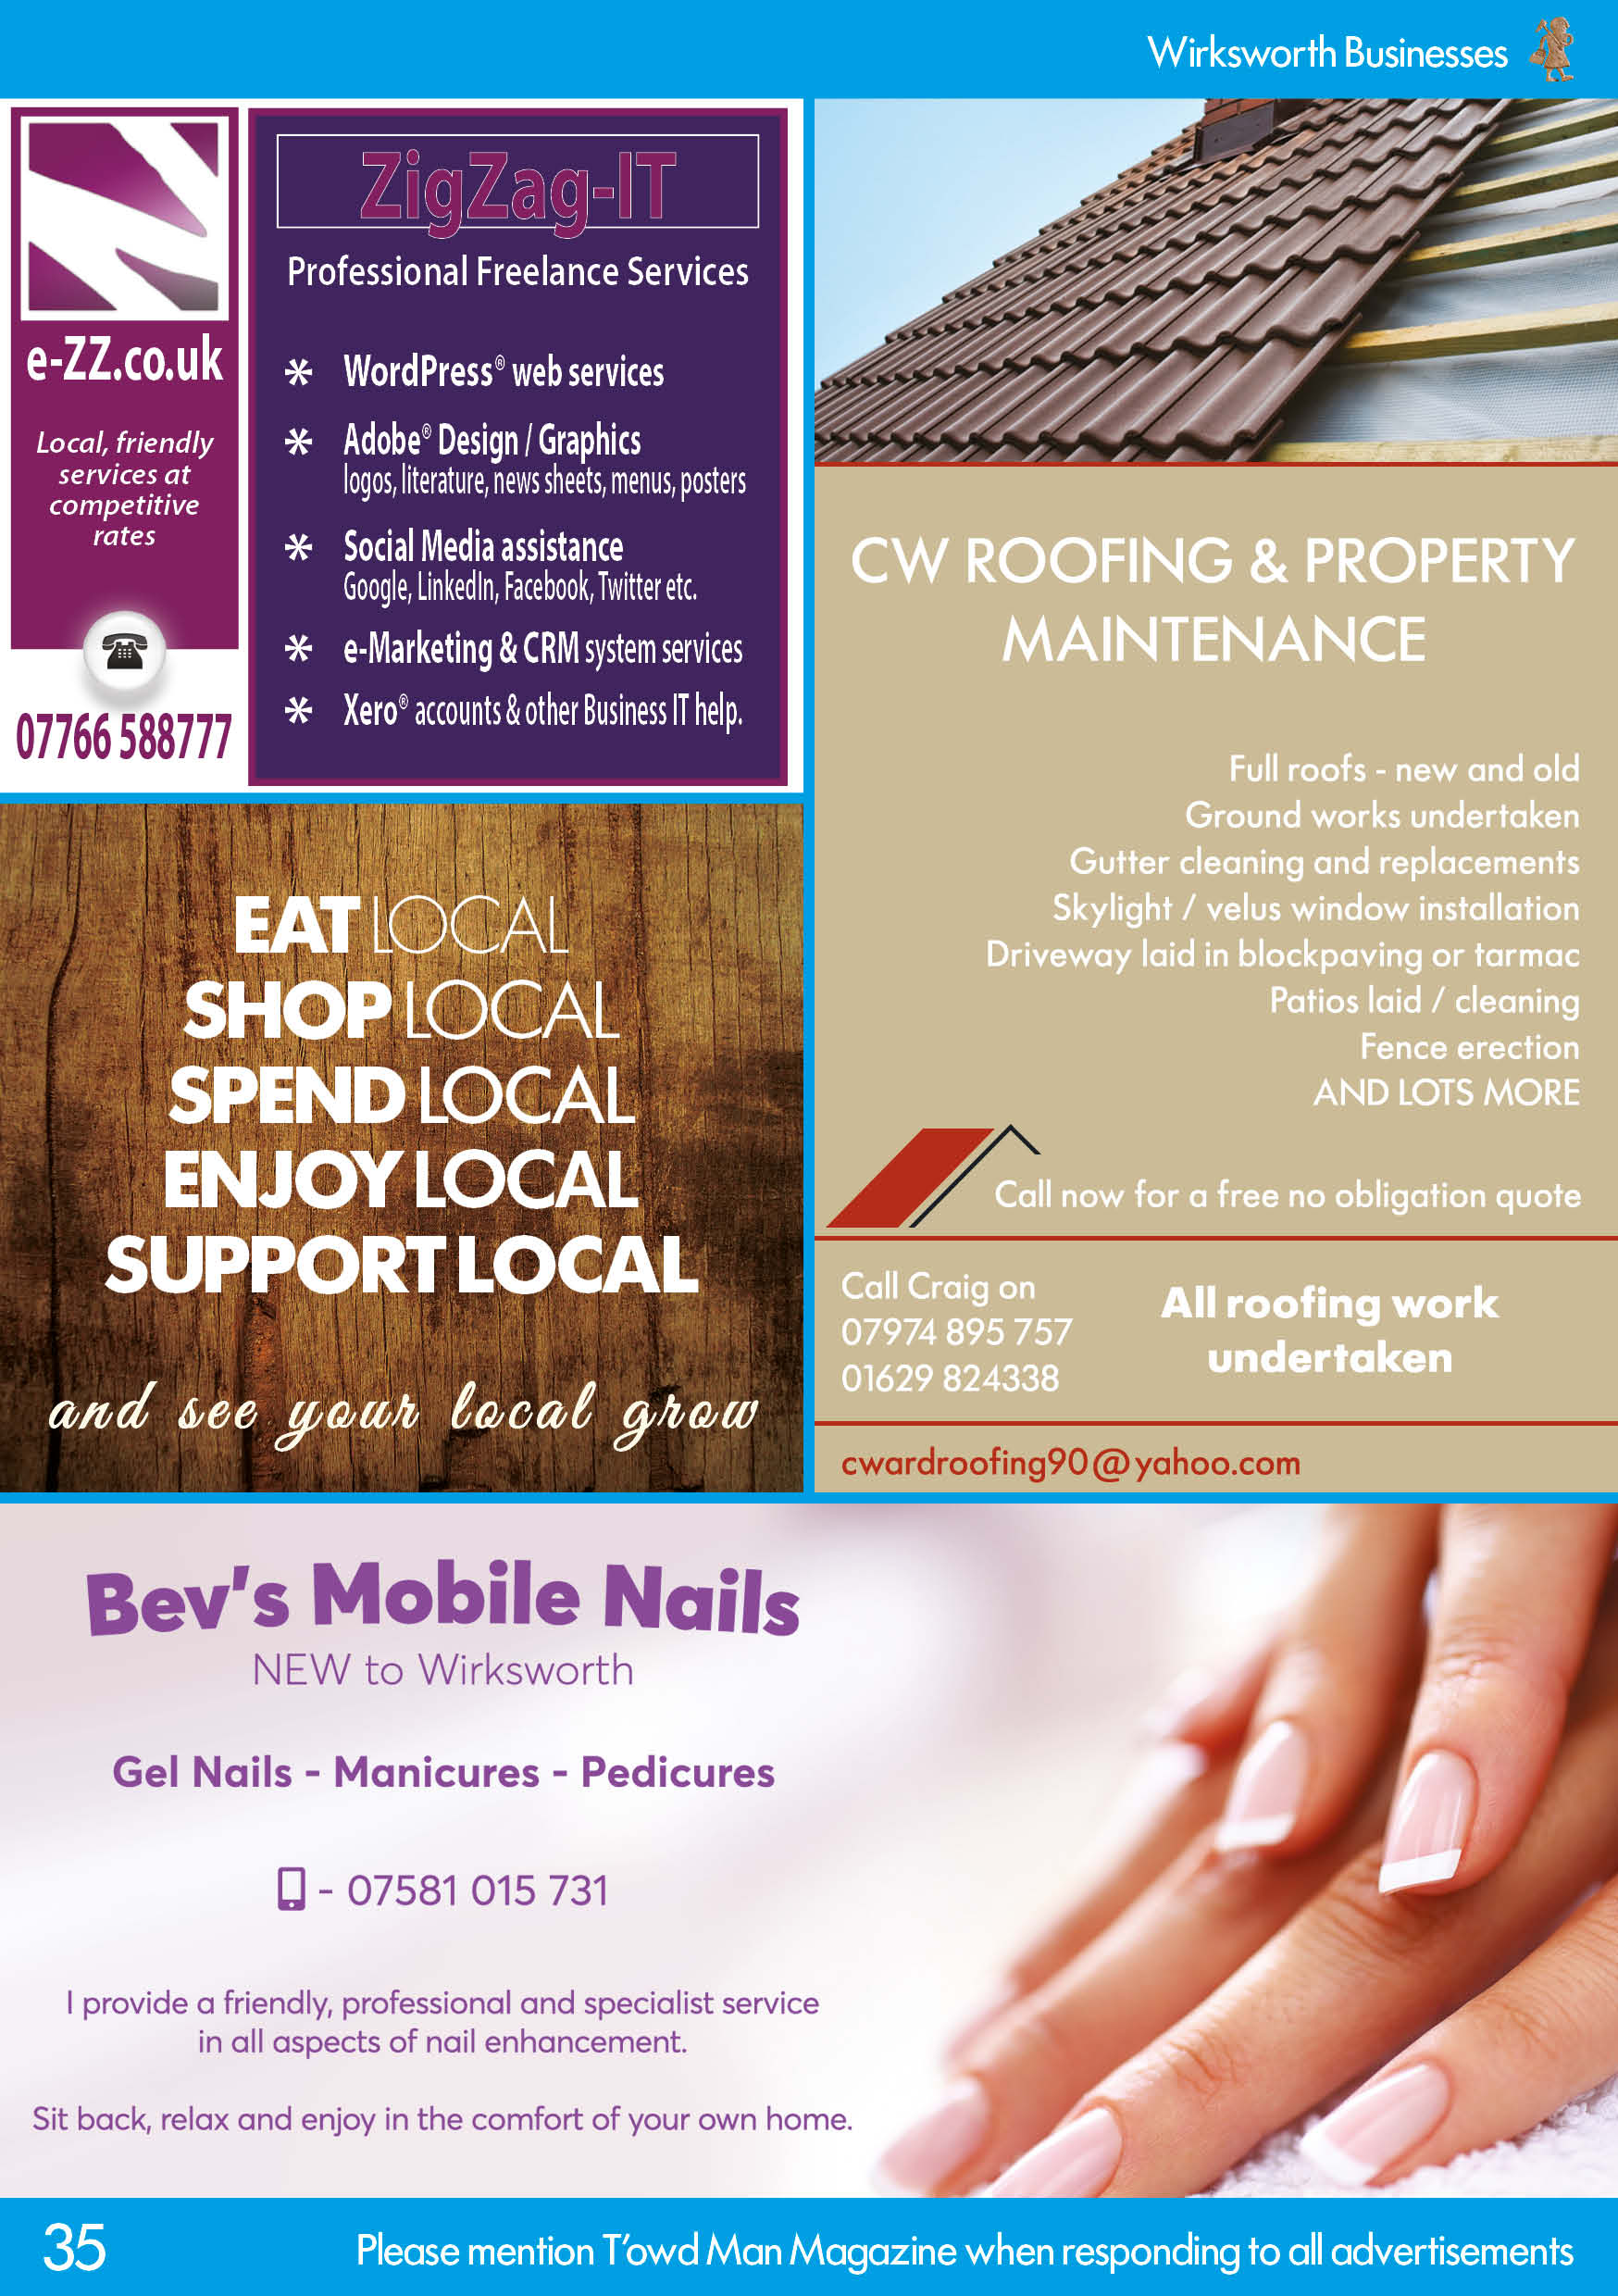 Bevs Mobile Nails